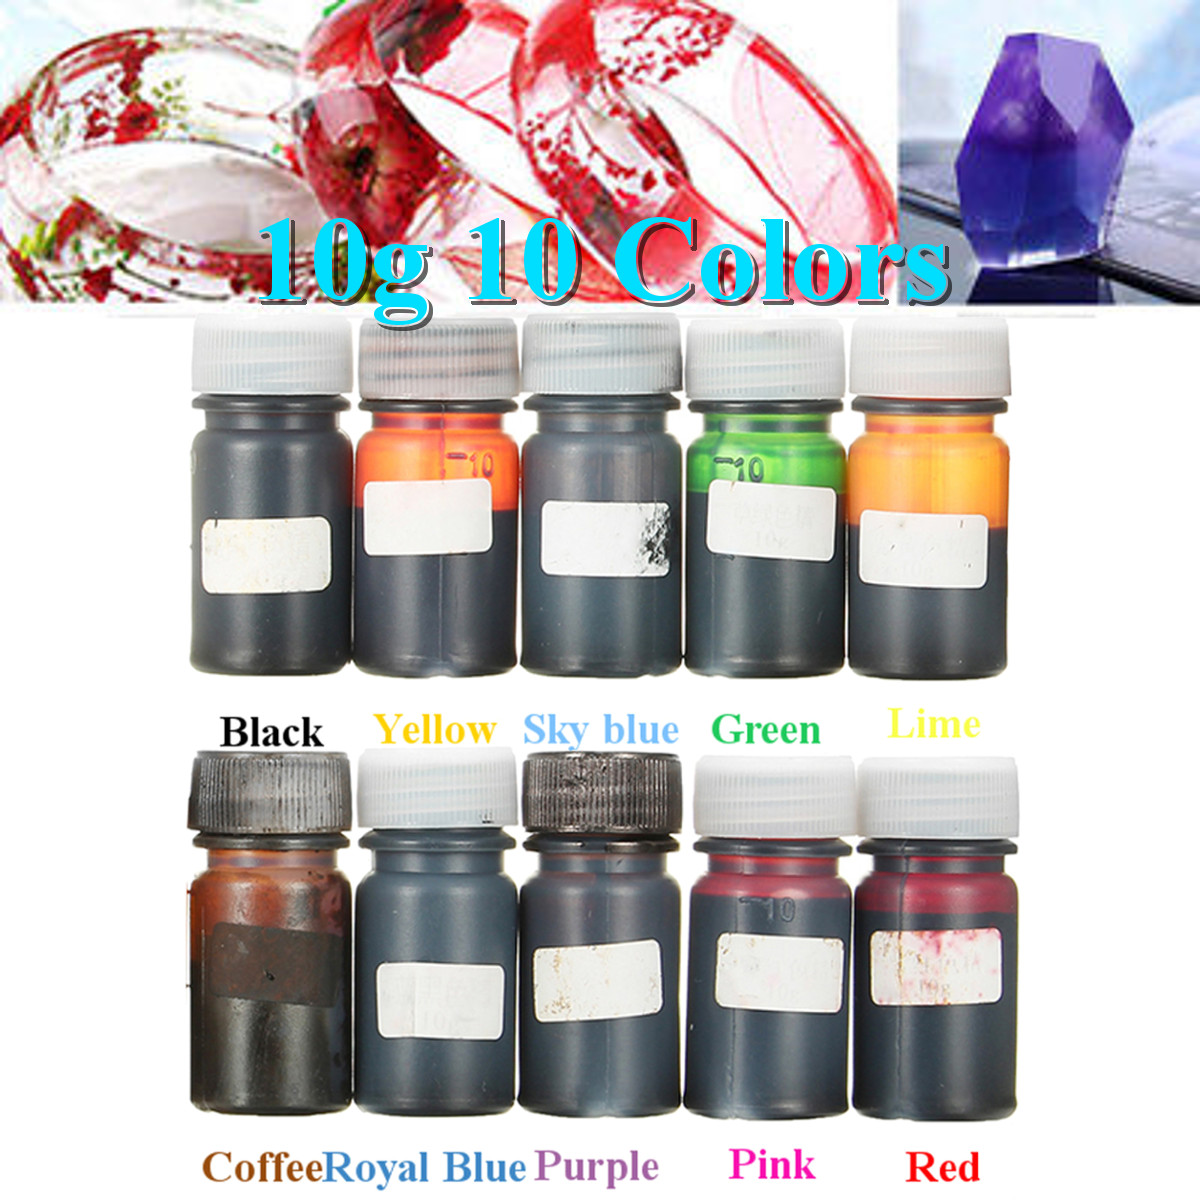 10-Colors-Epoxy-UV-Resin-Dye-Colorant-Resin-Liquid-Pigment-Mix-Color-DIY-Art-Crafts-1208128